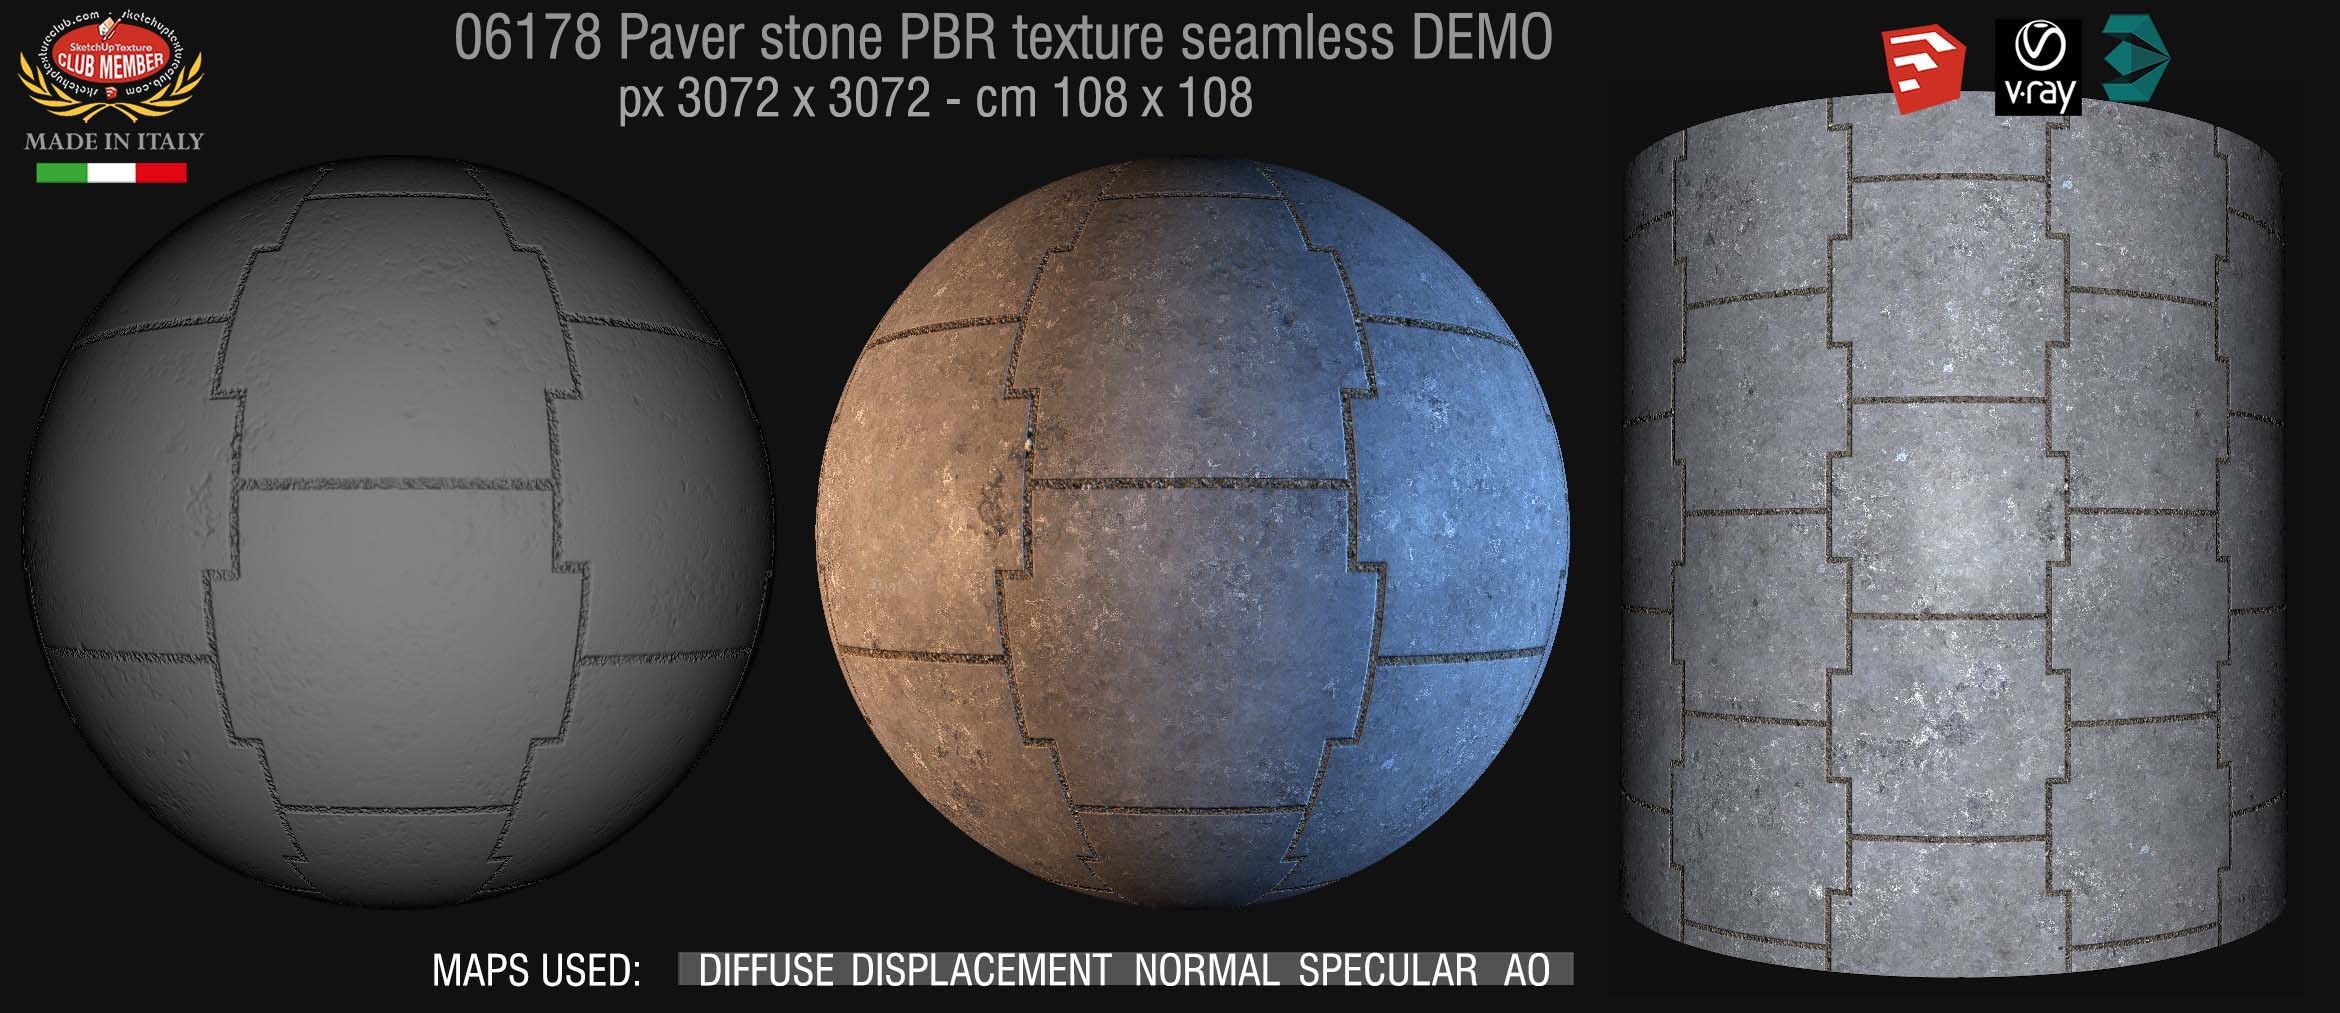 06178 paver stone PBR texture seamless DEMO